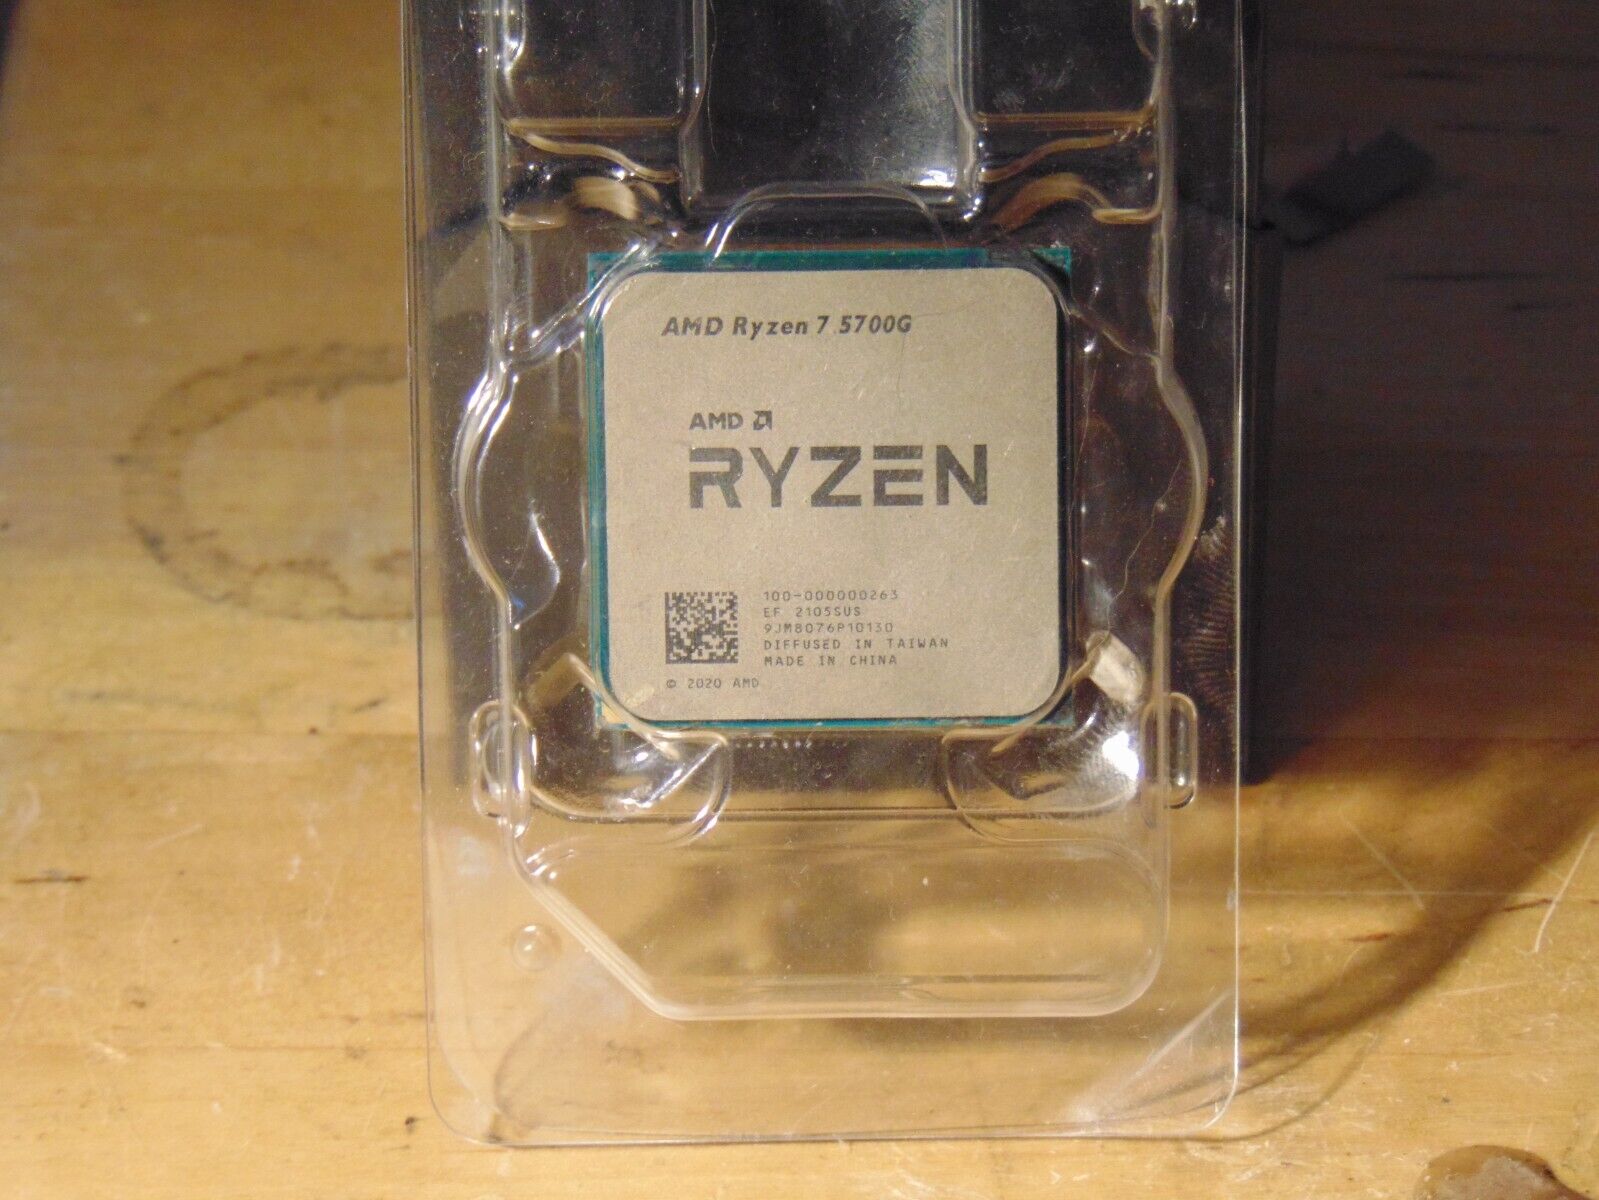 AMD Ryzen 7 5700G Processor (4.6 GHz, 8 Cores, Socket AM4) (NOT WORKING)